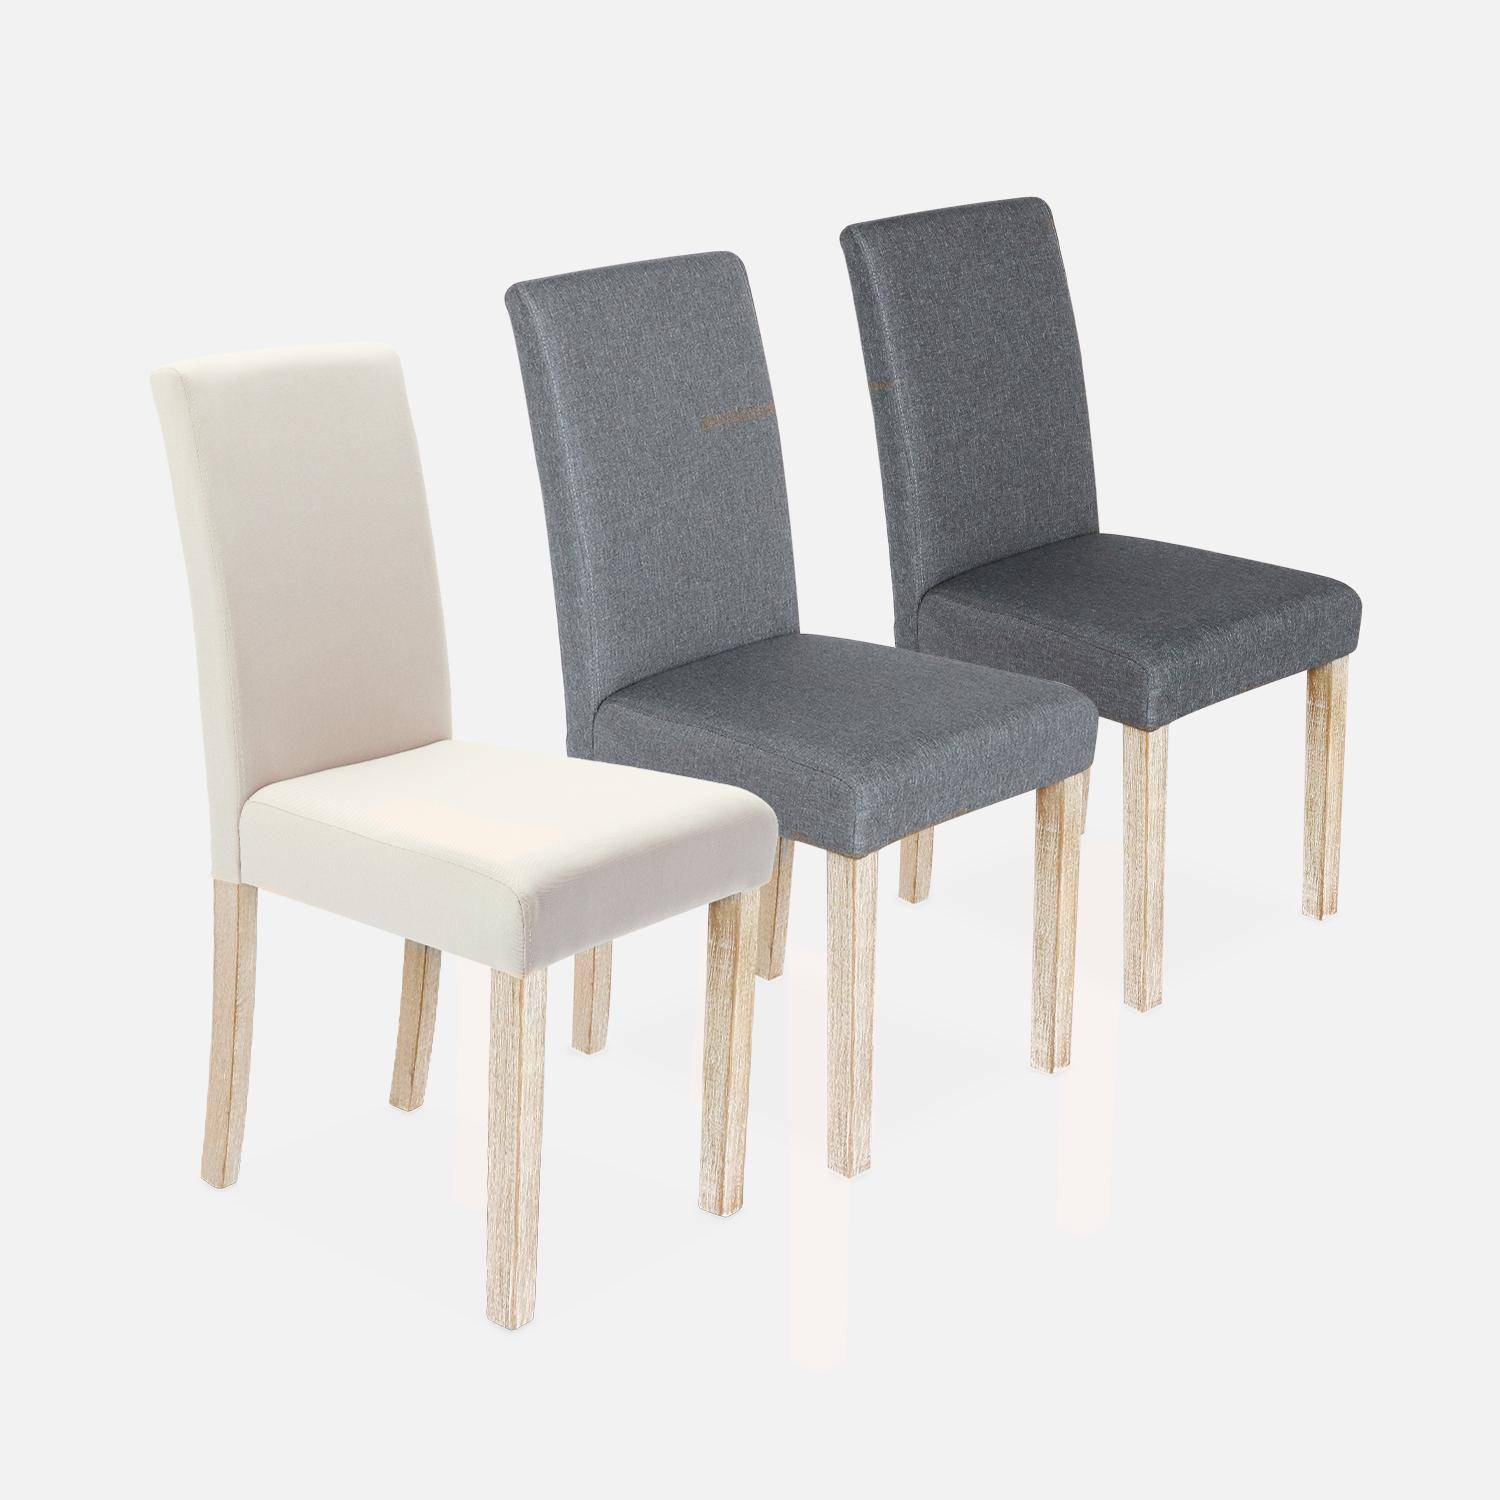 4er Set Stühle mit Stoffbezug Hellgrau, Holzbeine mit Ceruse Finish,sweeek,Photo6